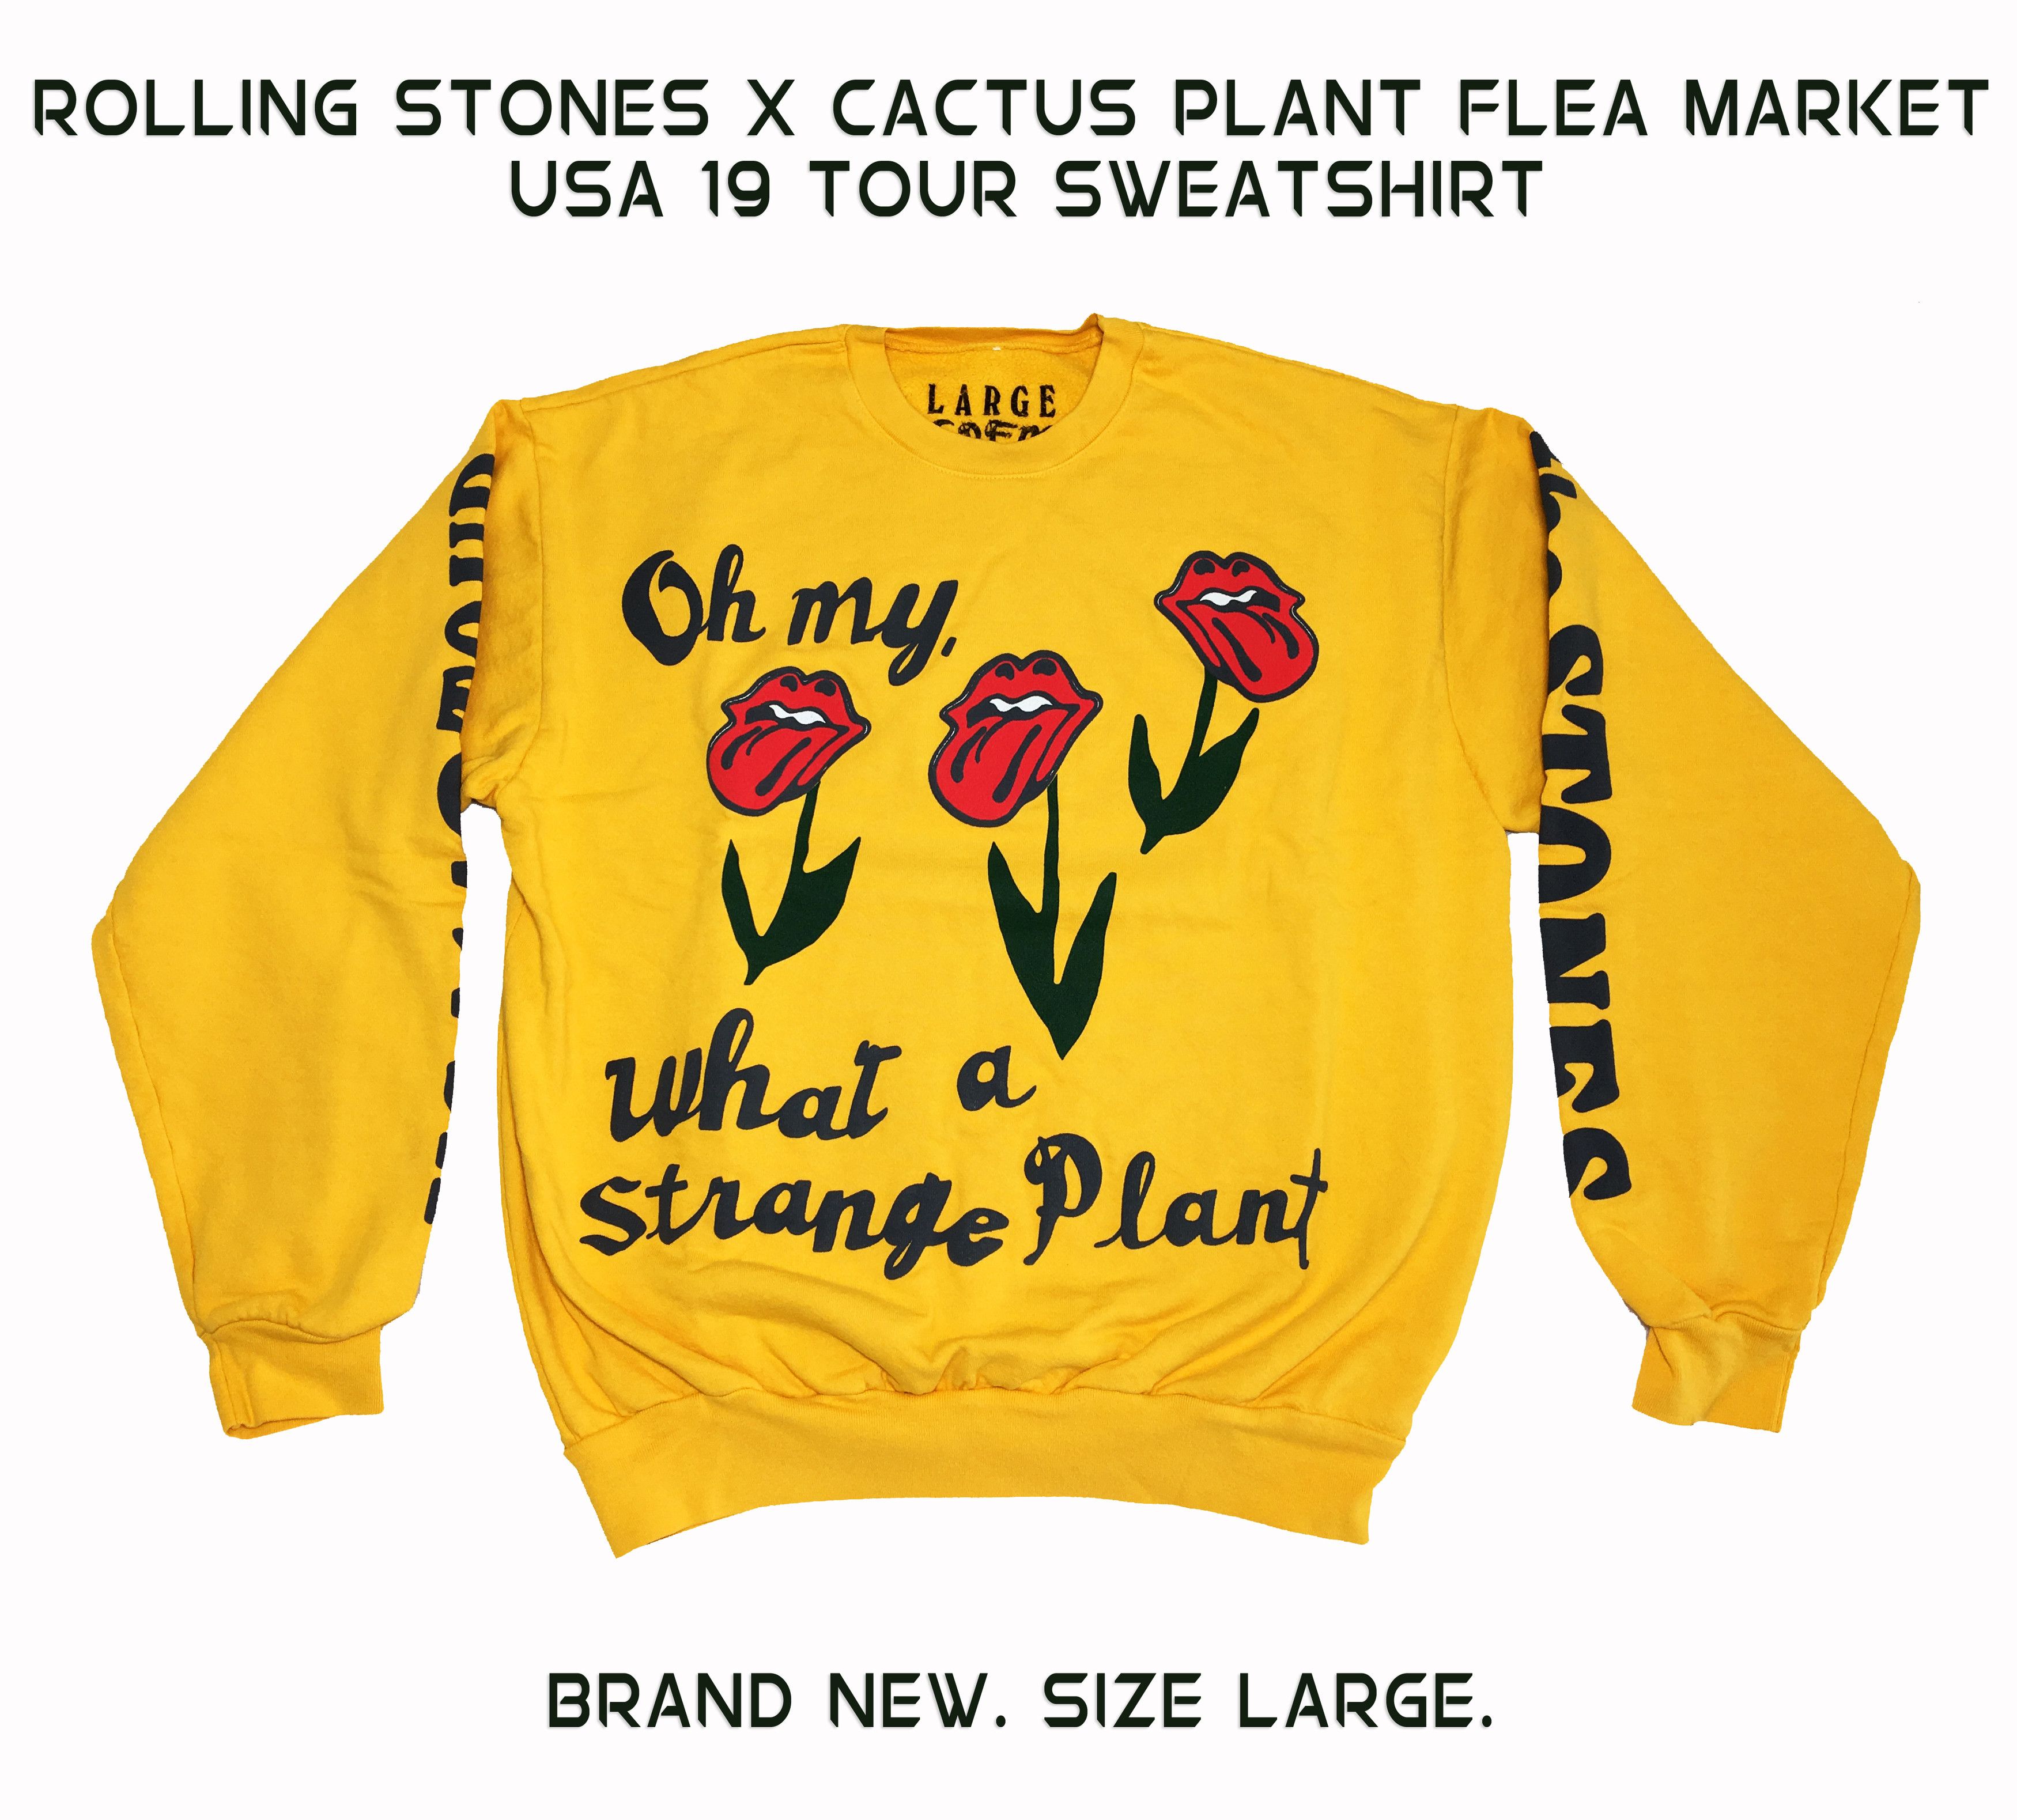 Cactus Plant Flea Market × The Rolling Stones | Grailed